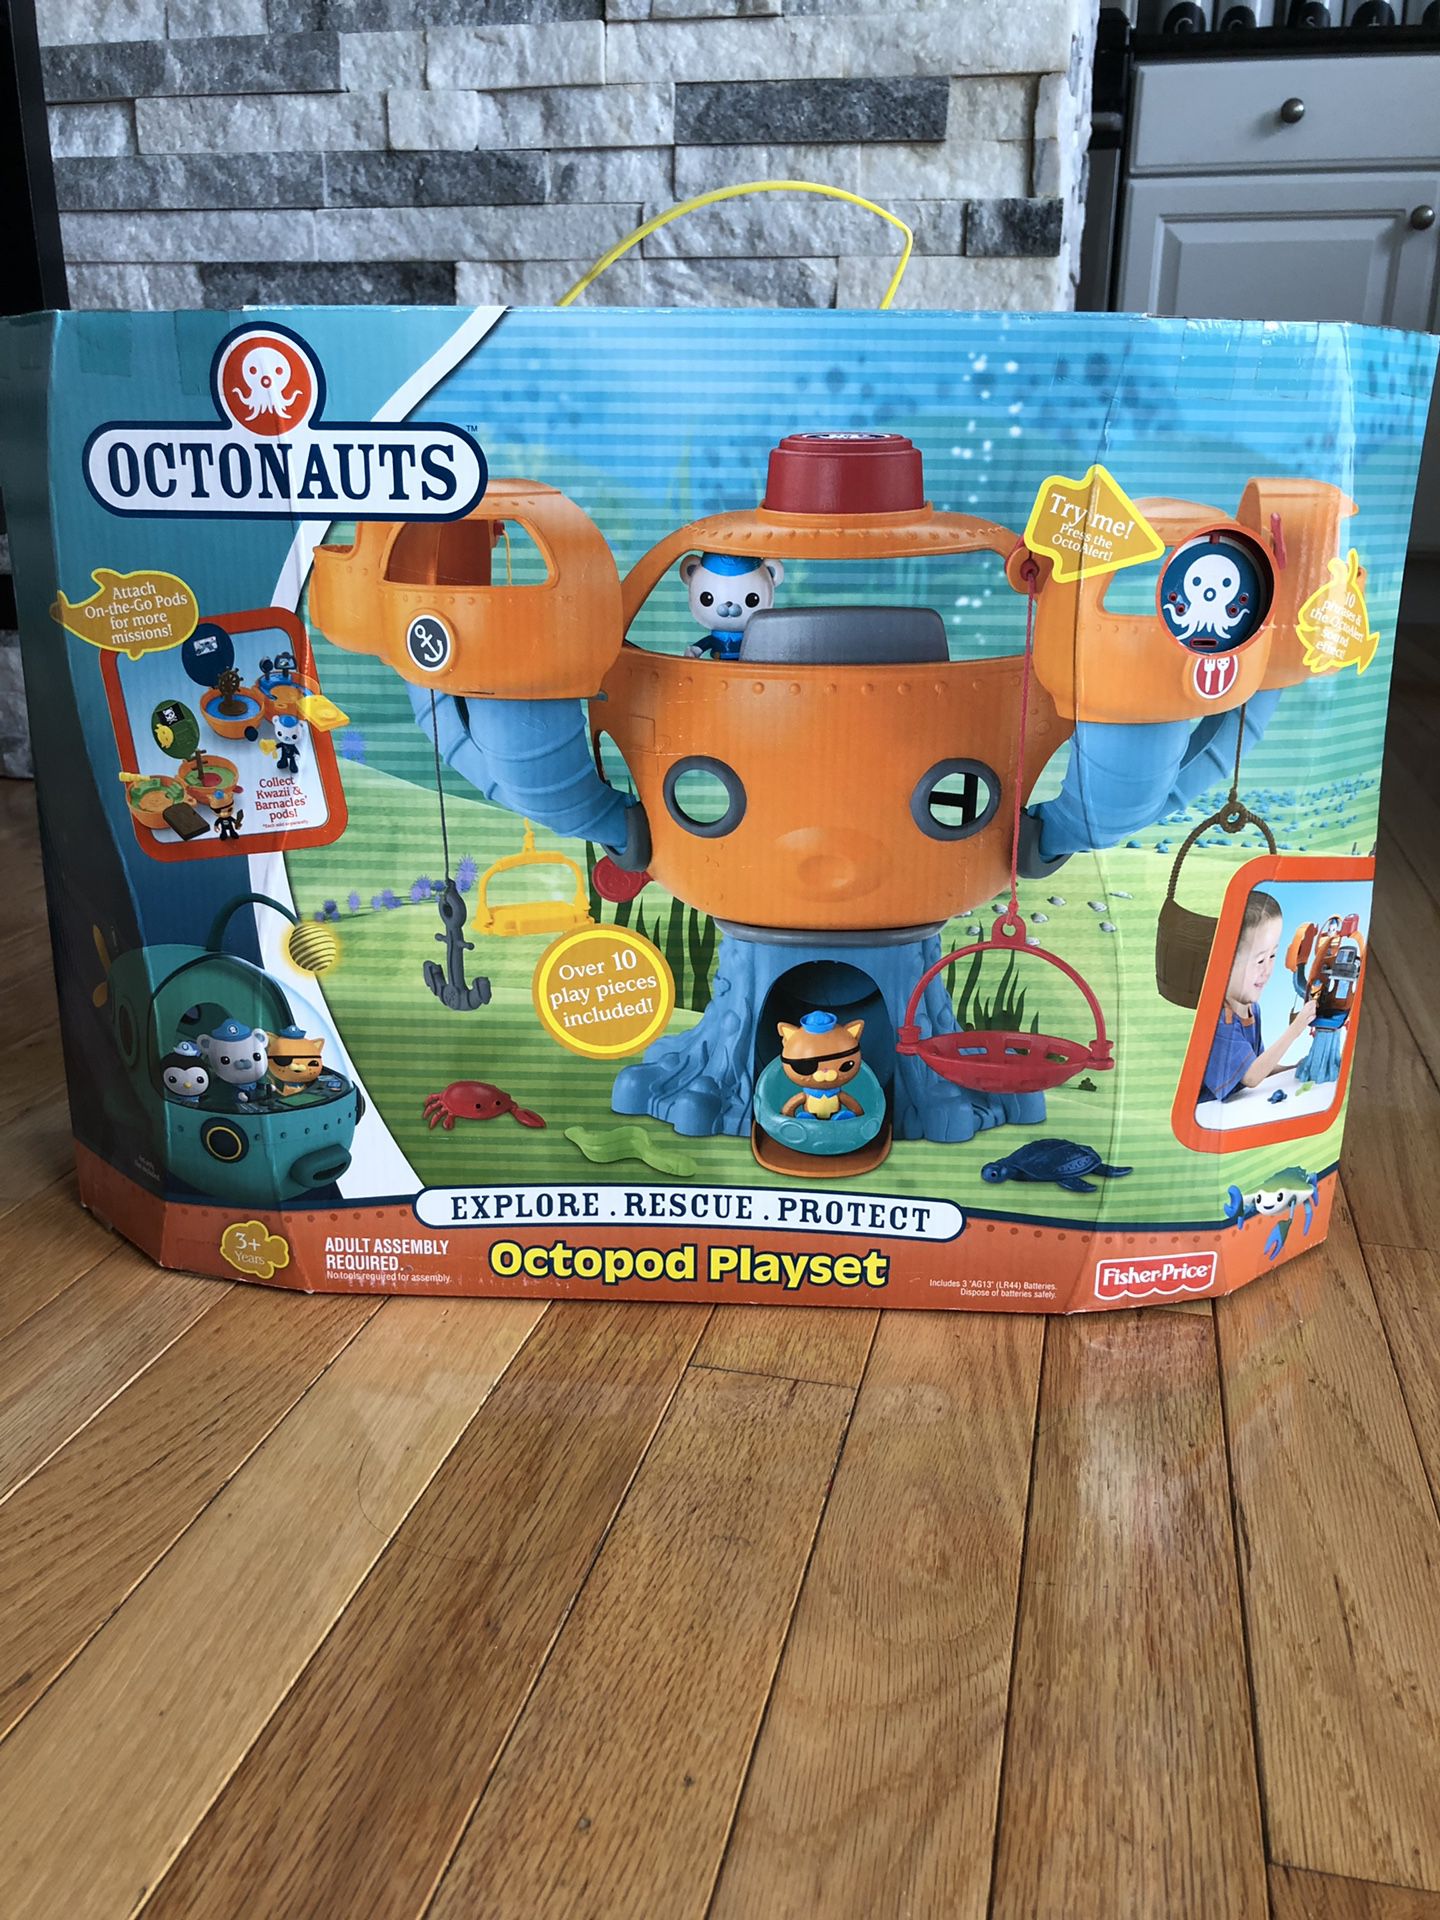 Octonauts Octopod Playset New in box